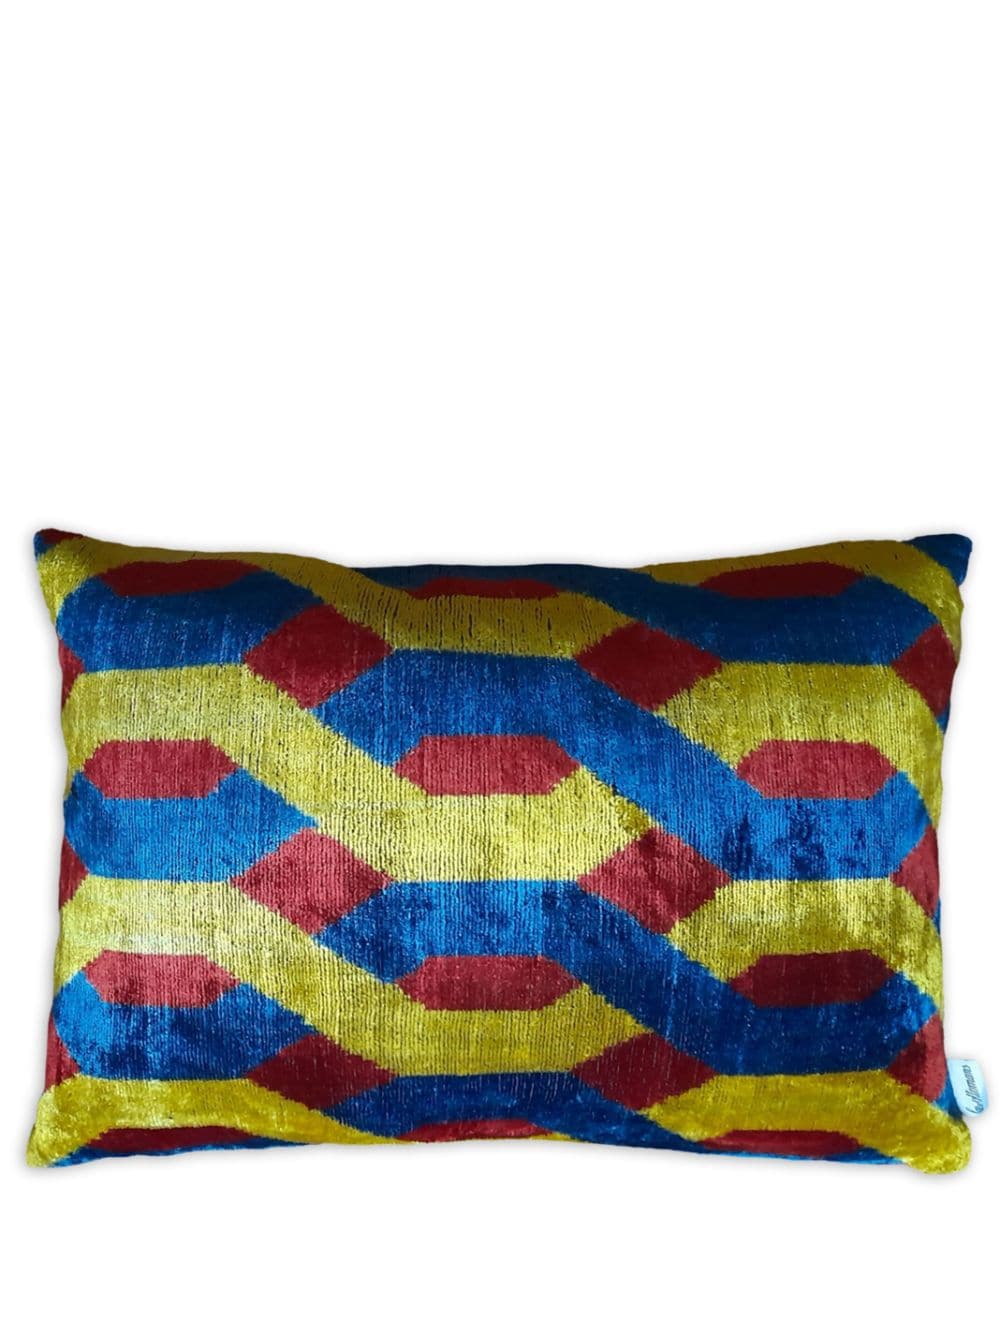 Les-ottomans 几何图案印花丝绒抱枕 In Multicolour